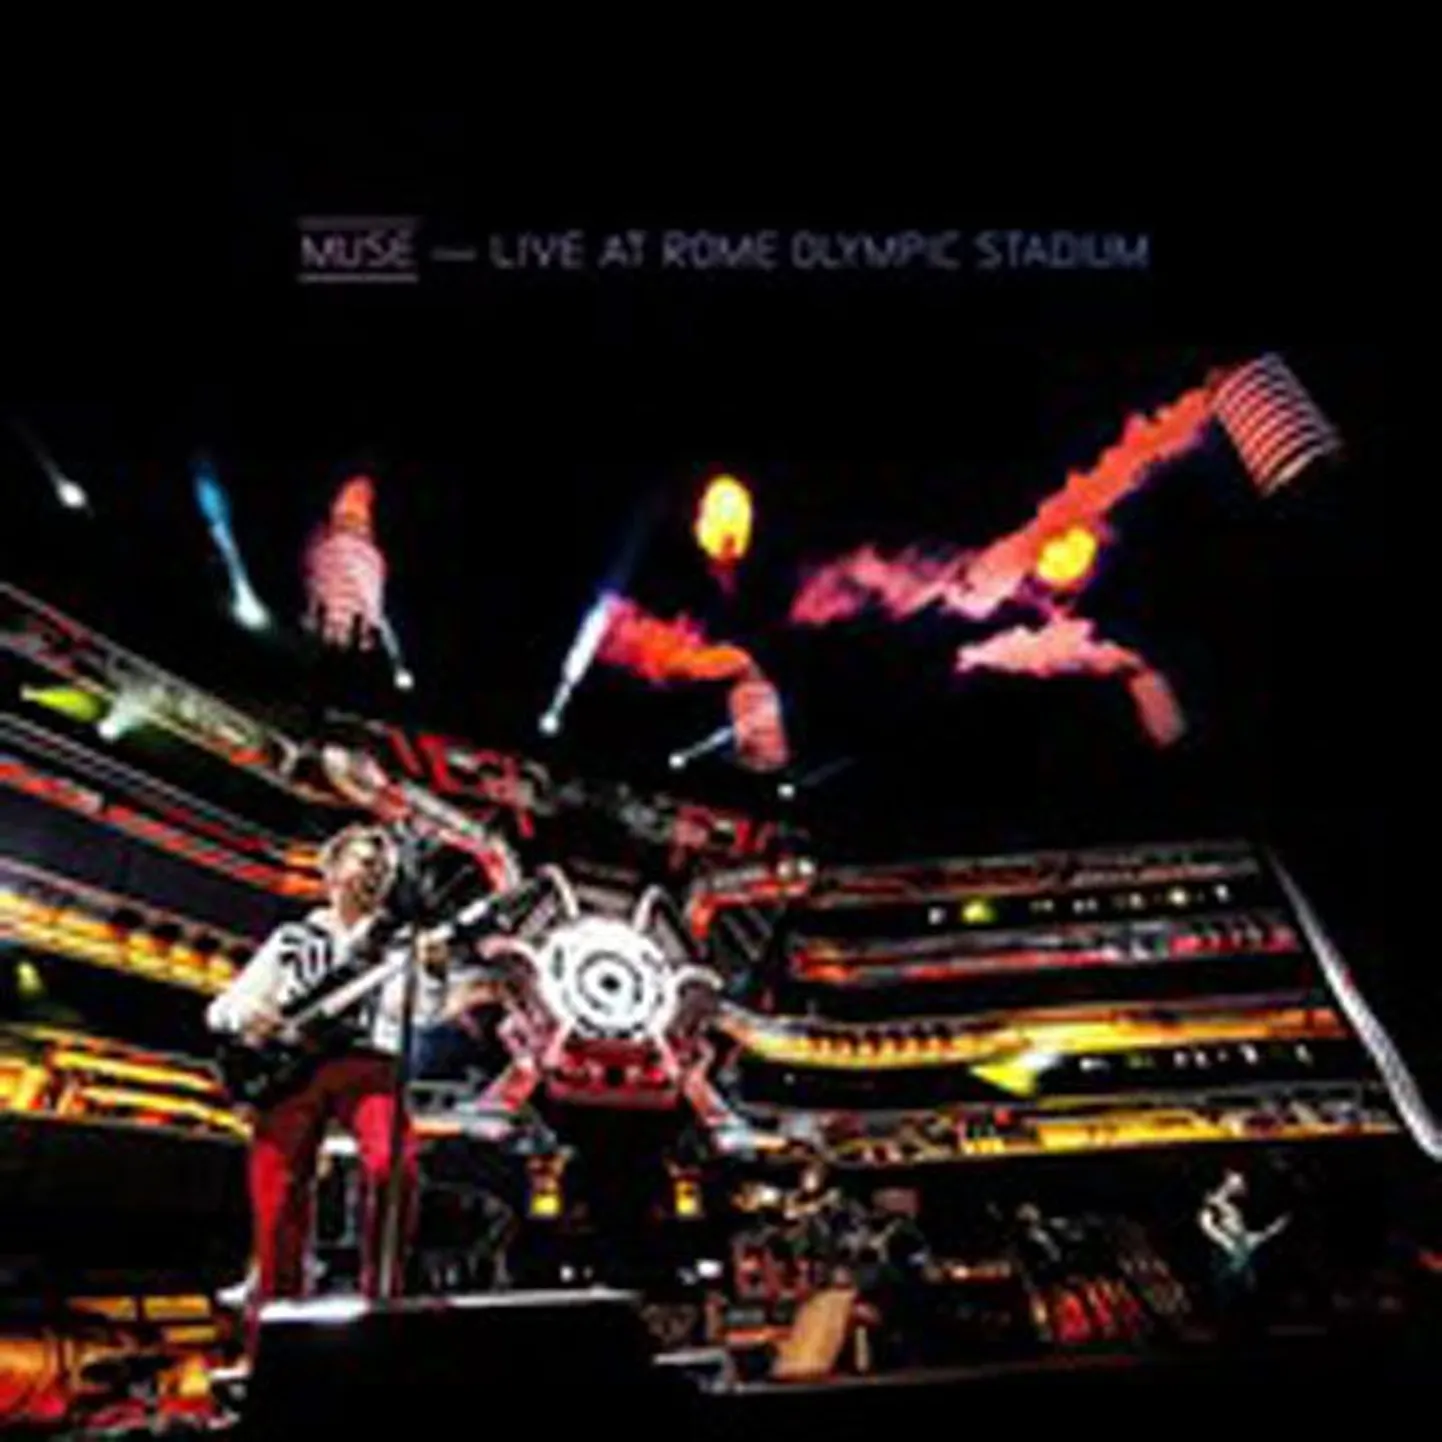 Muse
Live at Rome Olympic Stadium (CD+DVD)
(Warner Bros)